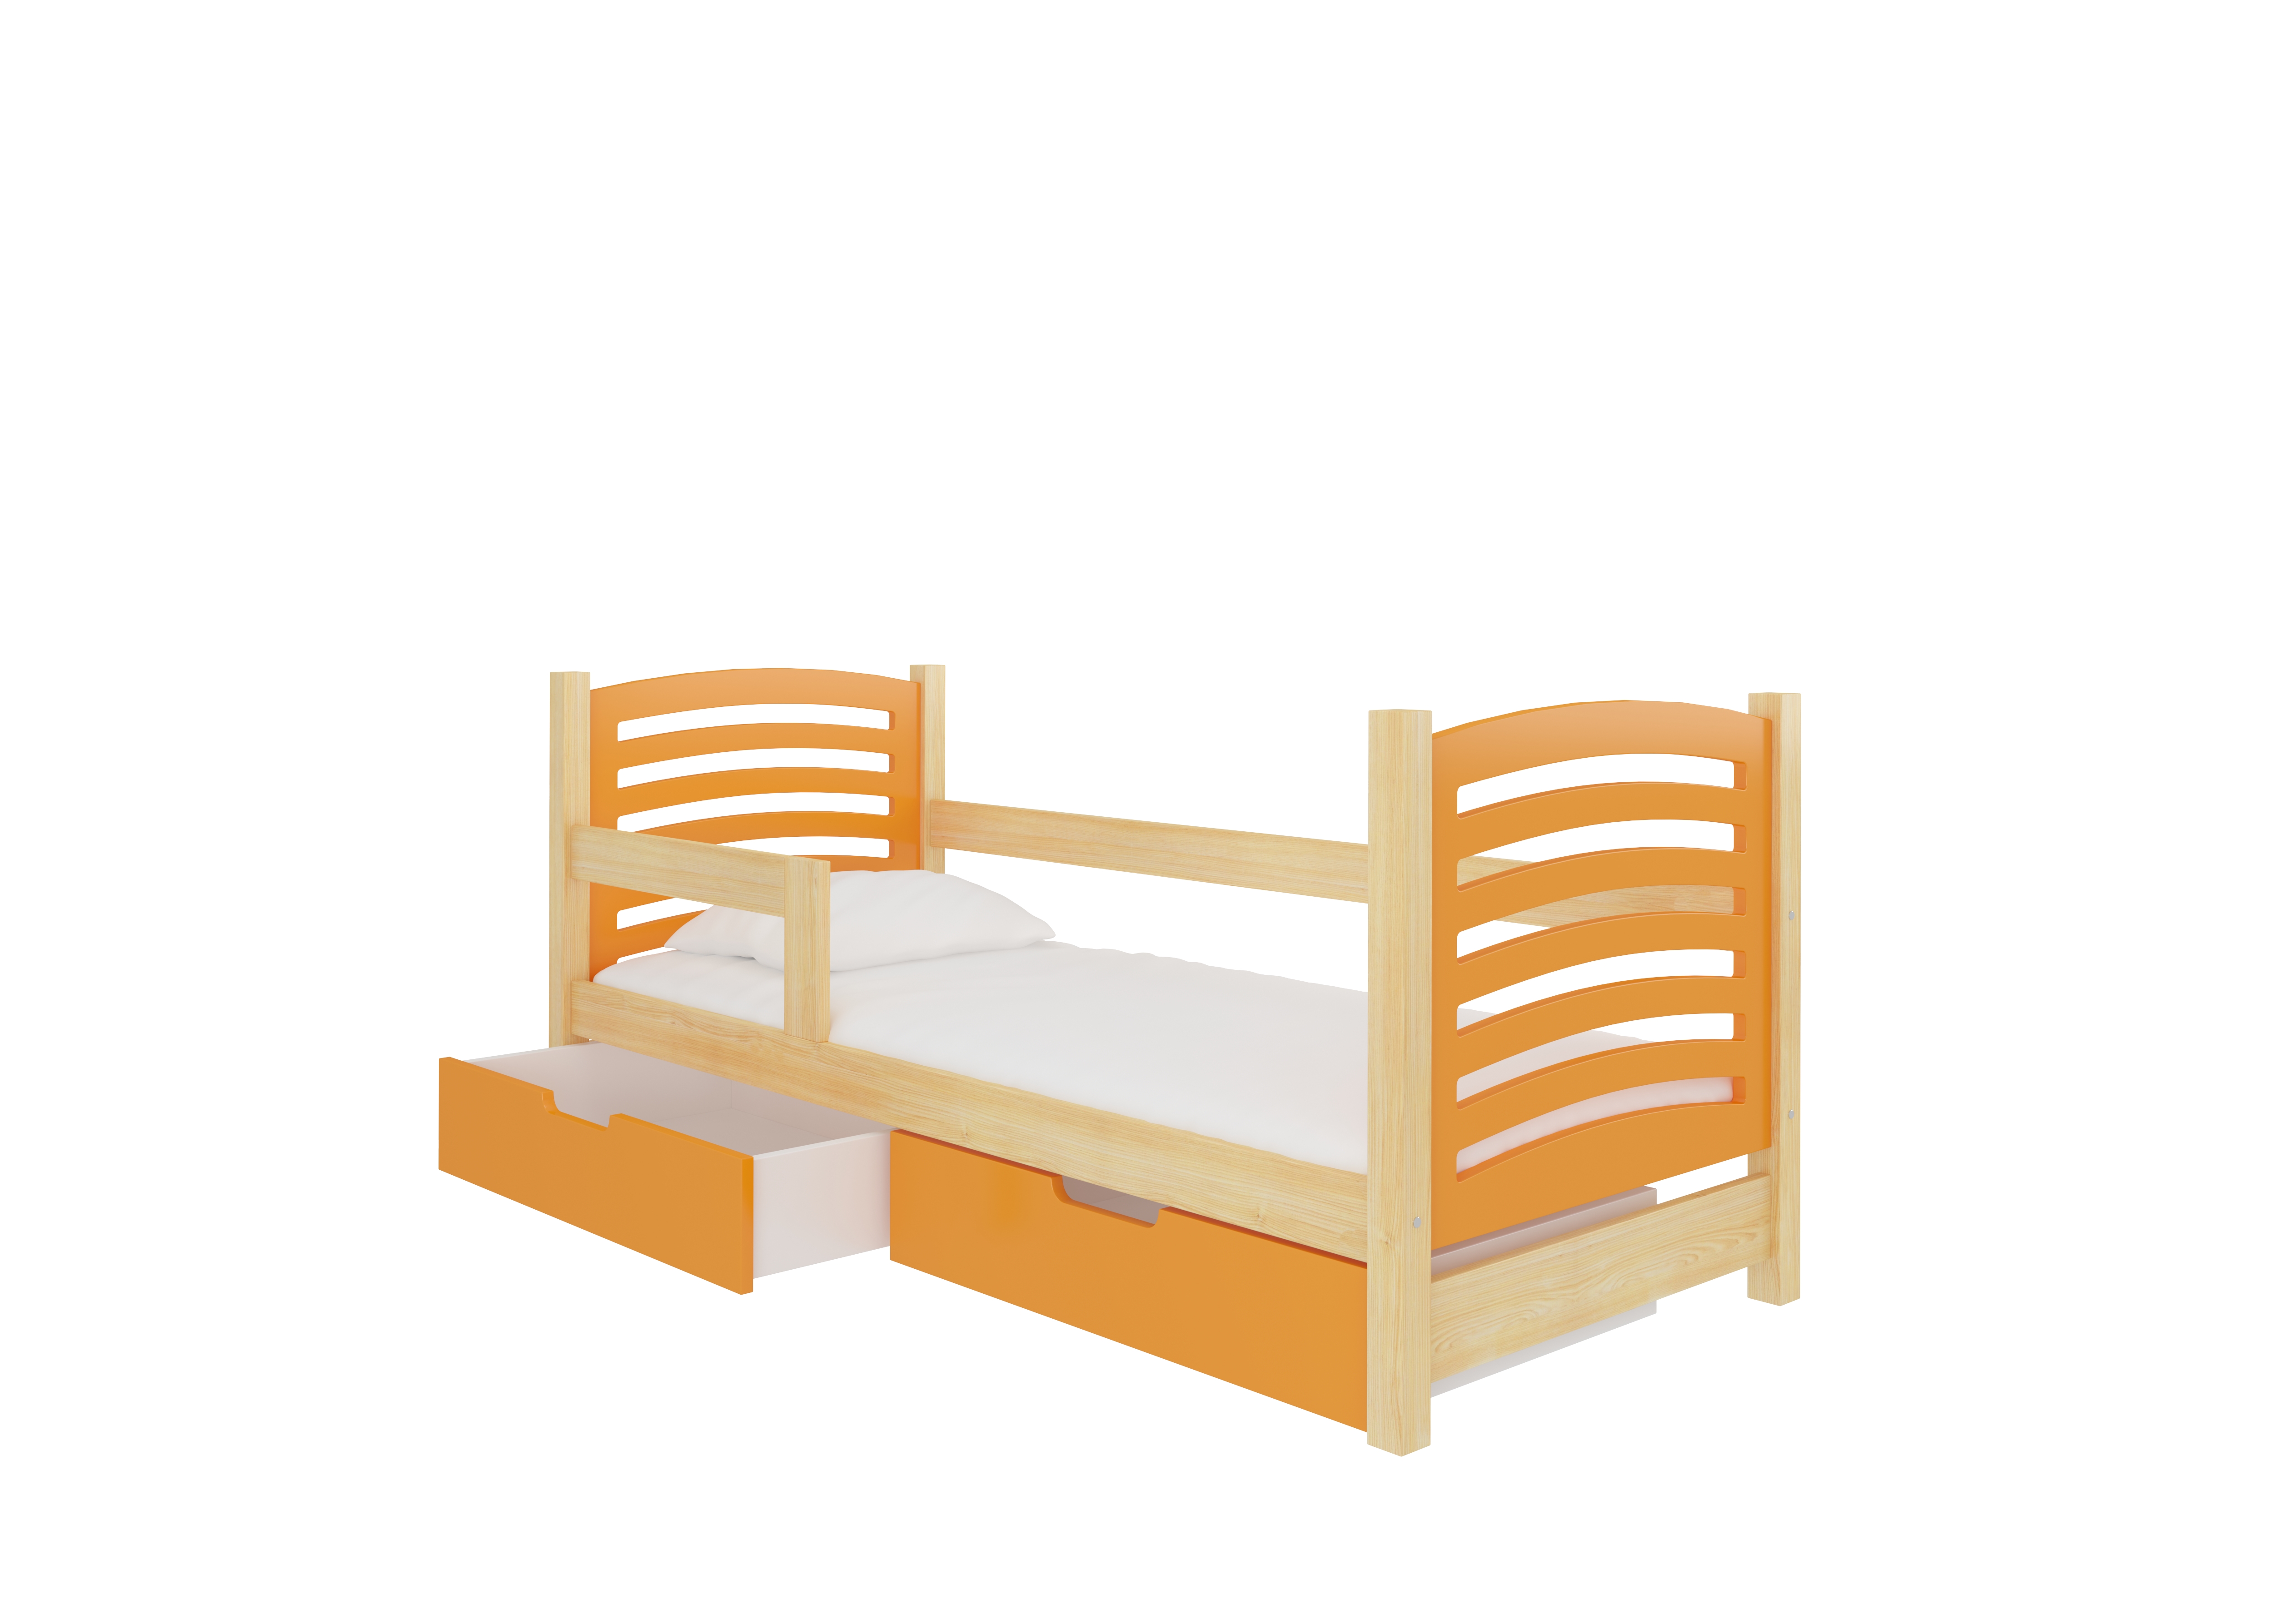 Dětská postel Camino Rám: Borovice bílá, Čela a šuplíky: Oranžová - Borovice bílá,Oranžová